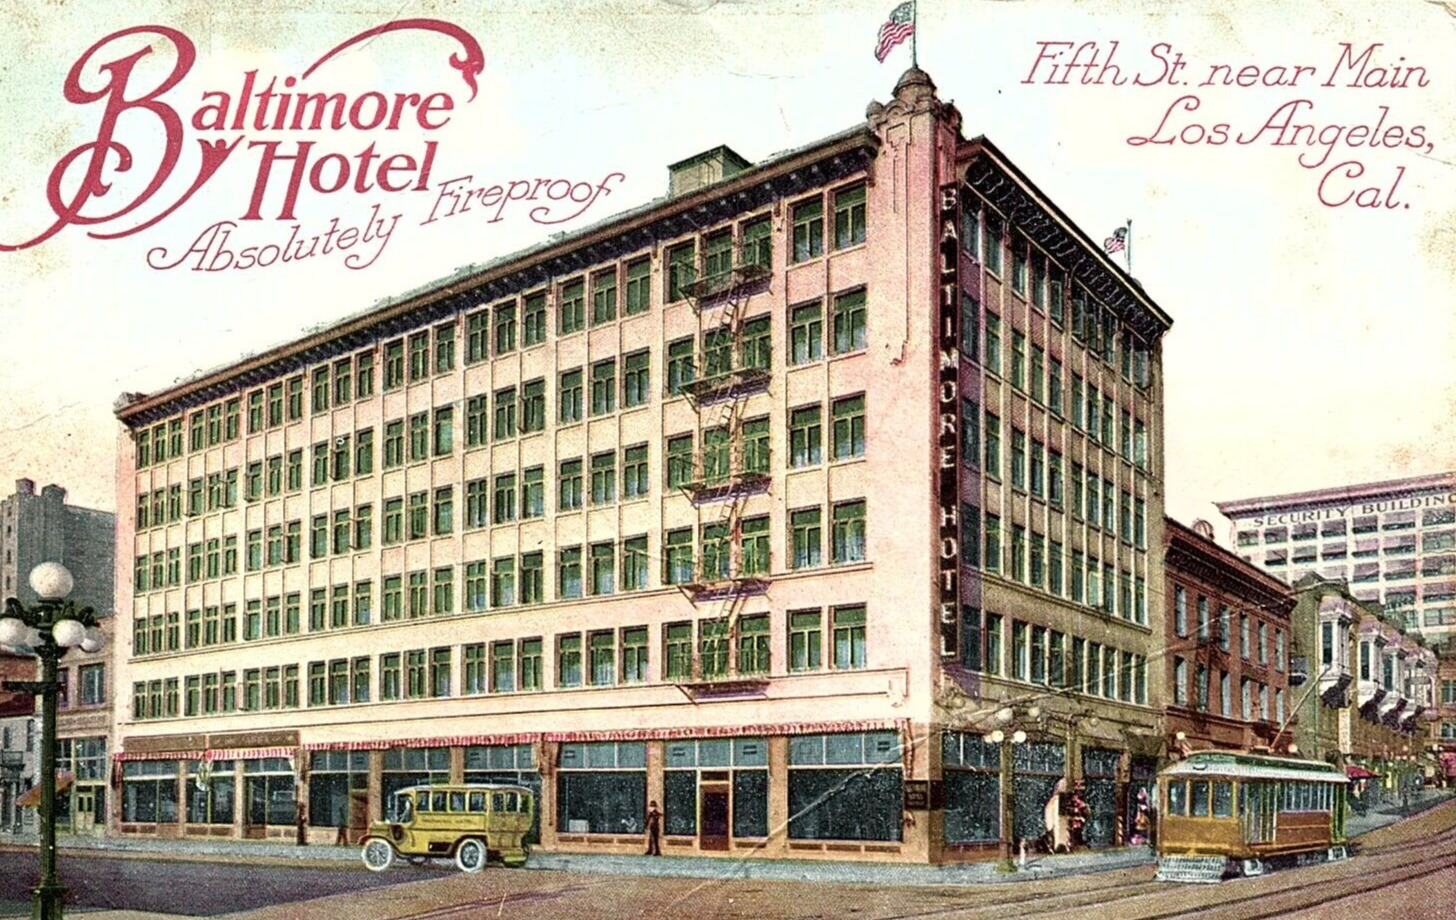 1915 LOS ANGELES CALIFORNIA BALTIMORE HOTEL FIREPROFF STREET VIEW POSTCARD 46-7